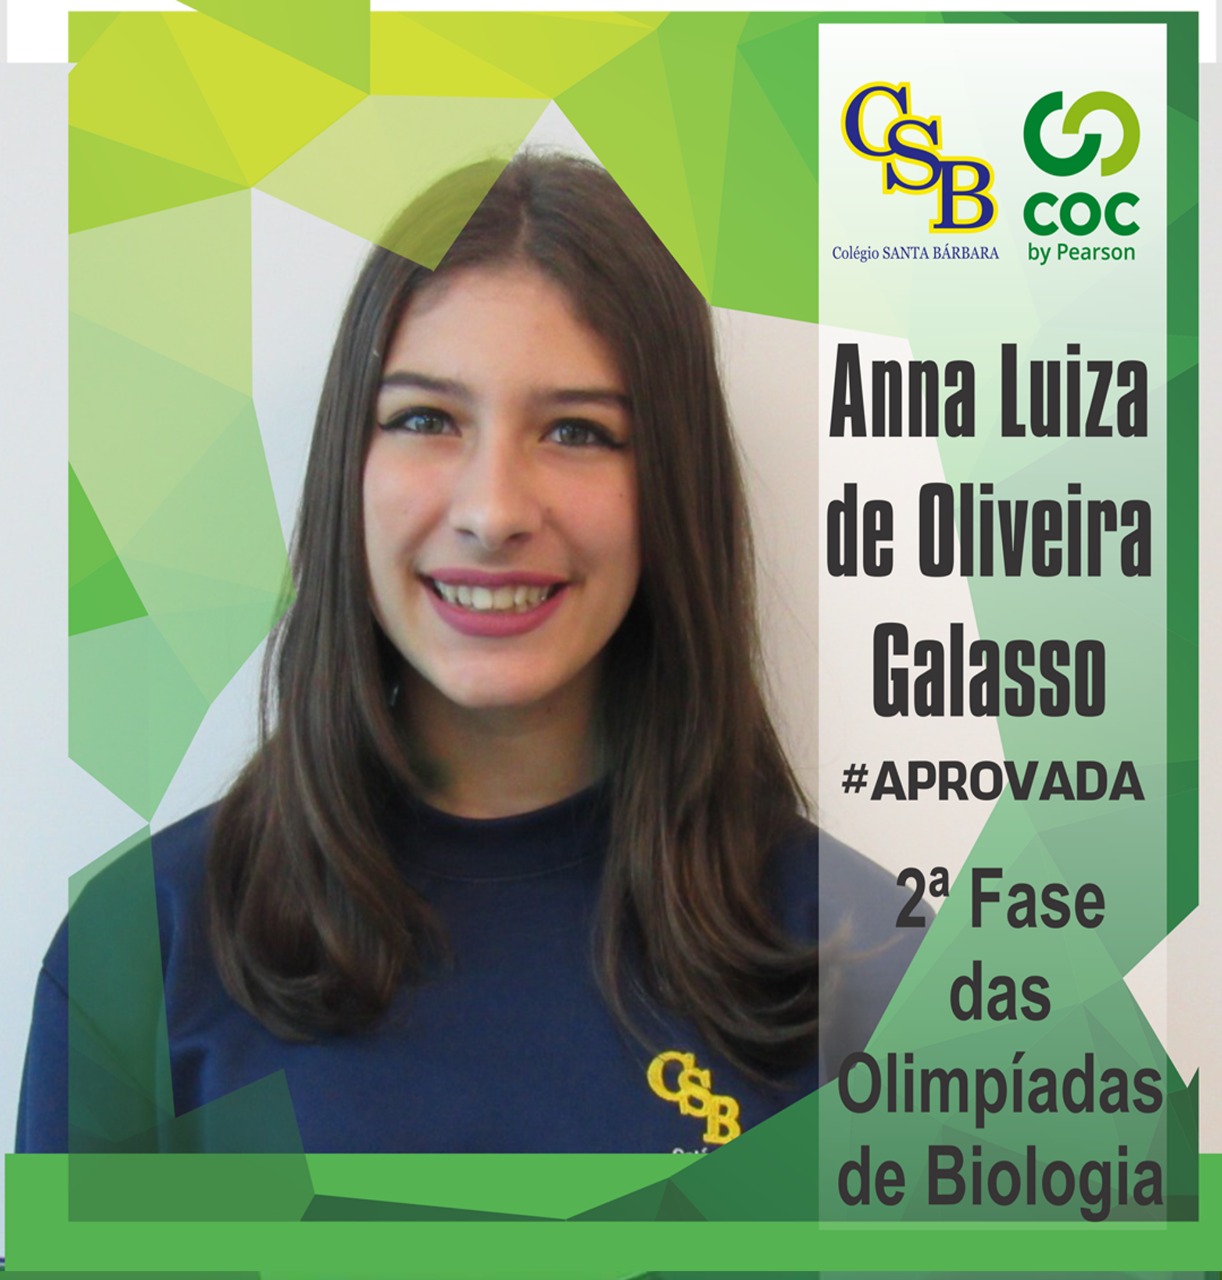 Anna Luiza de Oliveira Galasso